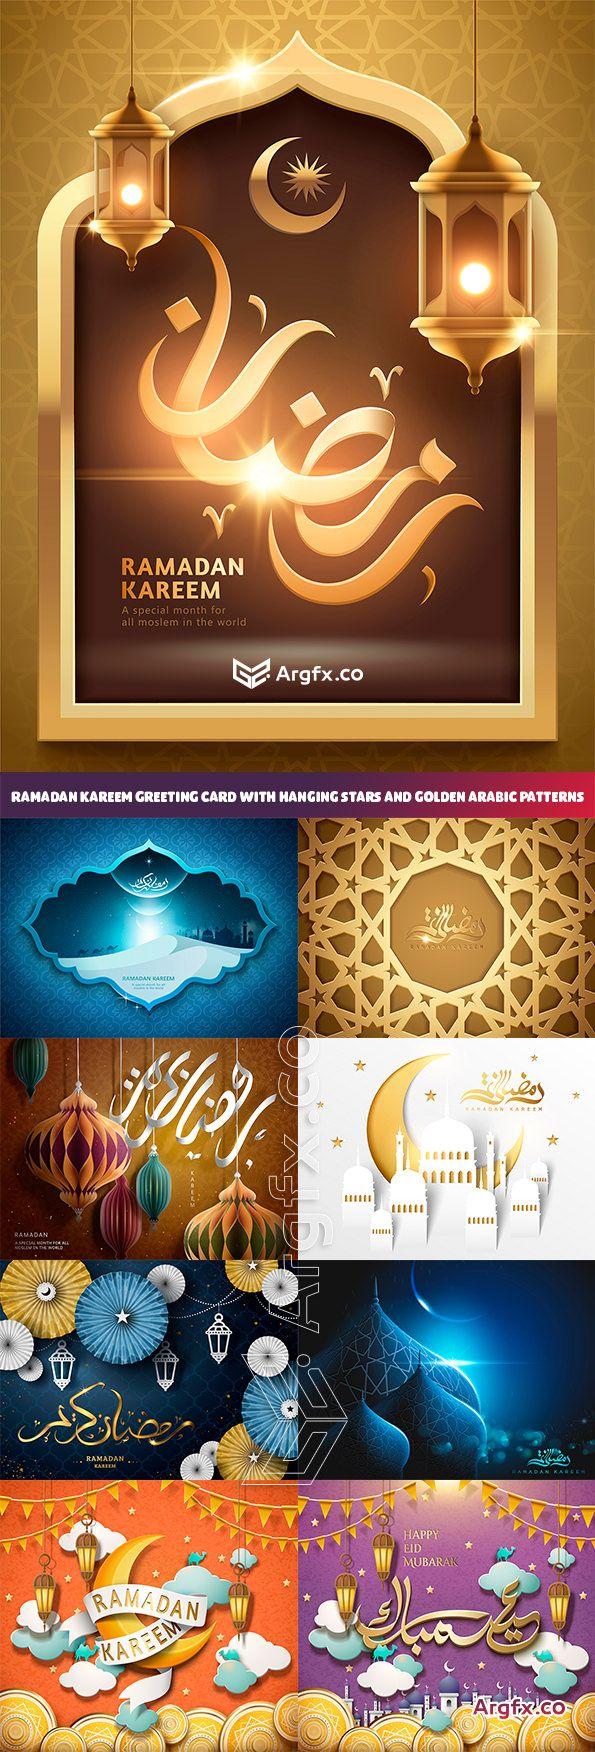 Golden Arabic Logo - Ramadan kareem greeting card with hanging stars and golden arabic